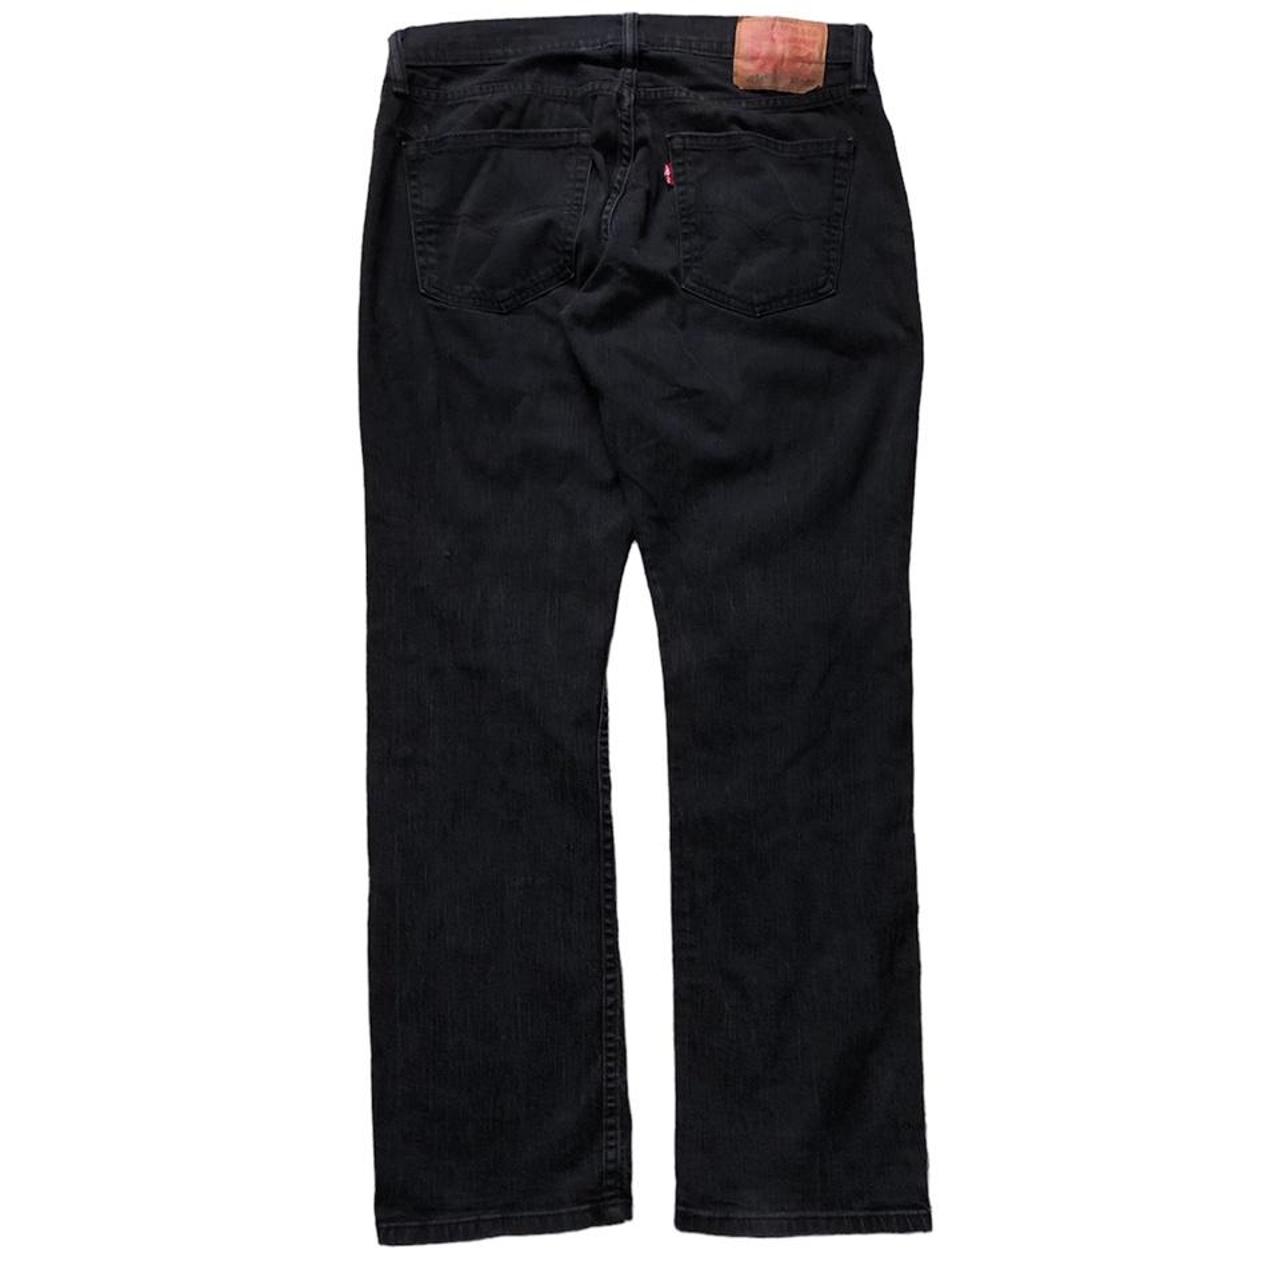 vintage levi’s 514 black jeans •size:... - Depop